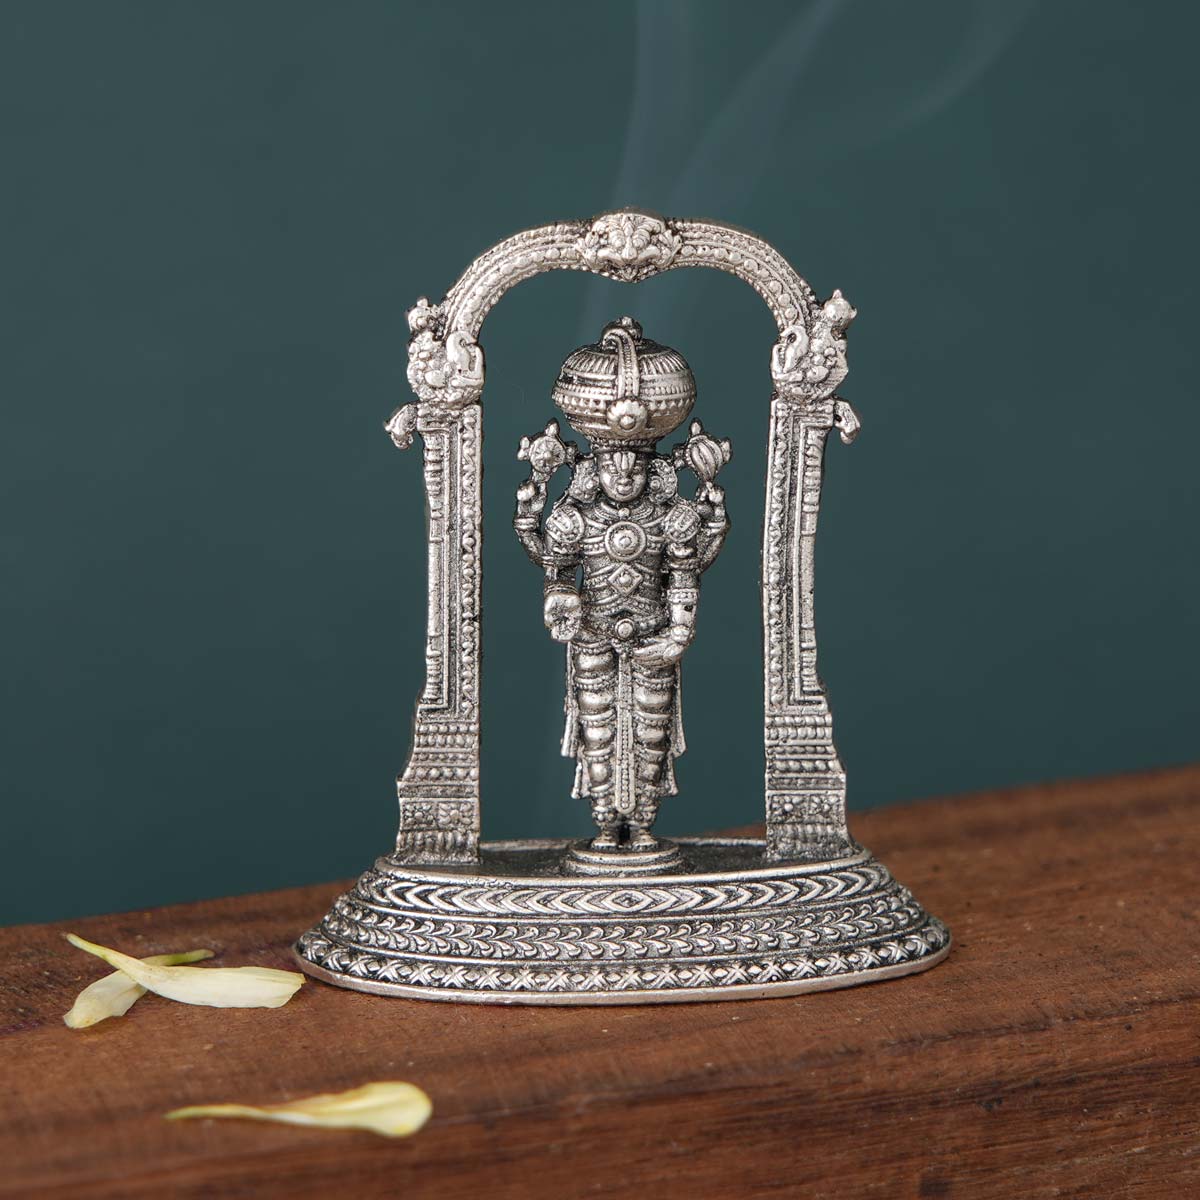 GOLDGIFTIDEAS 999 Silver & 24K Gold Plated MahaLakshmi Idol for Poojan  Purpose, Prosperity Gift (10 x 8 cm)